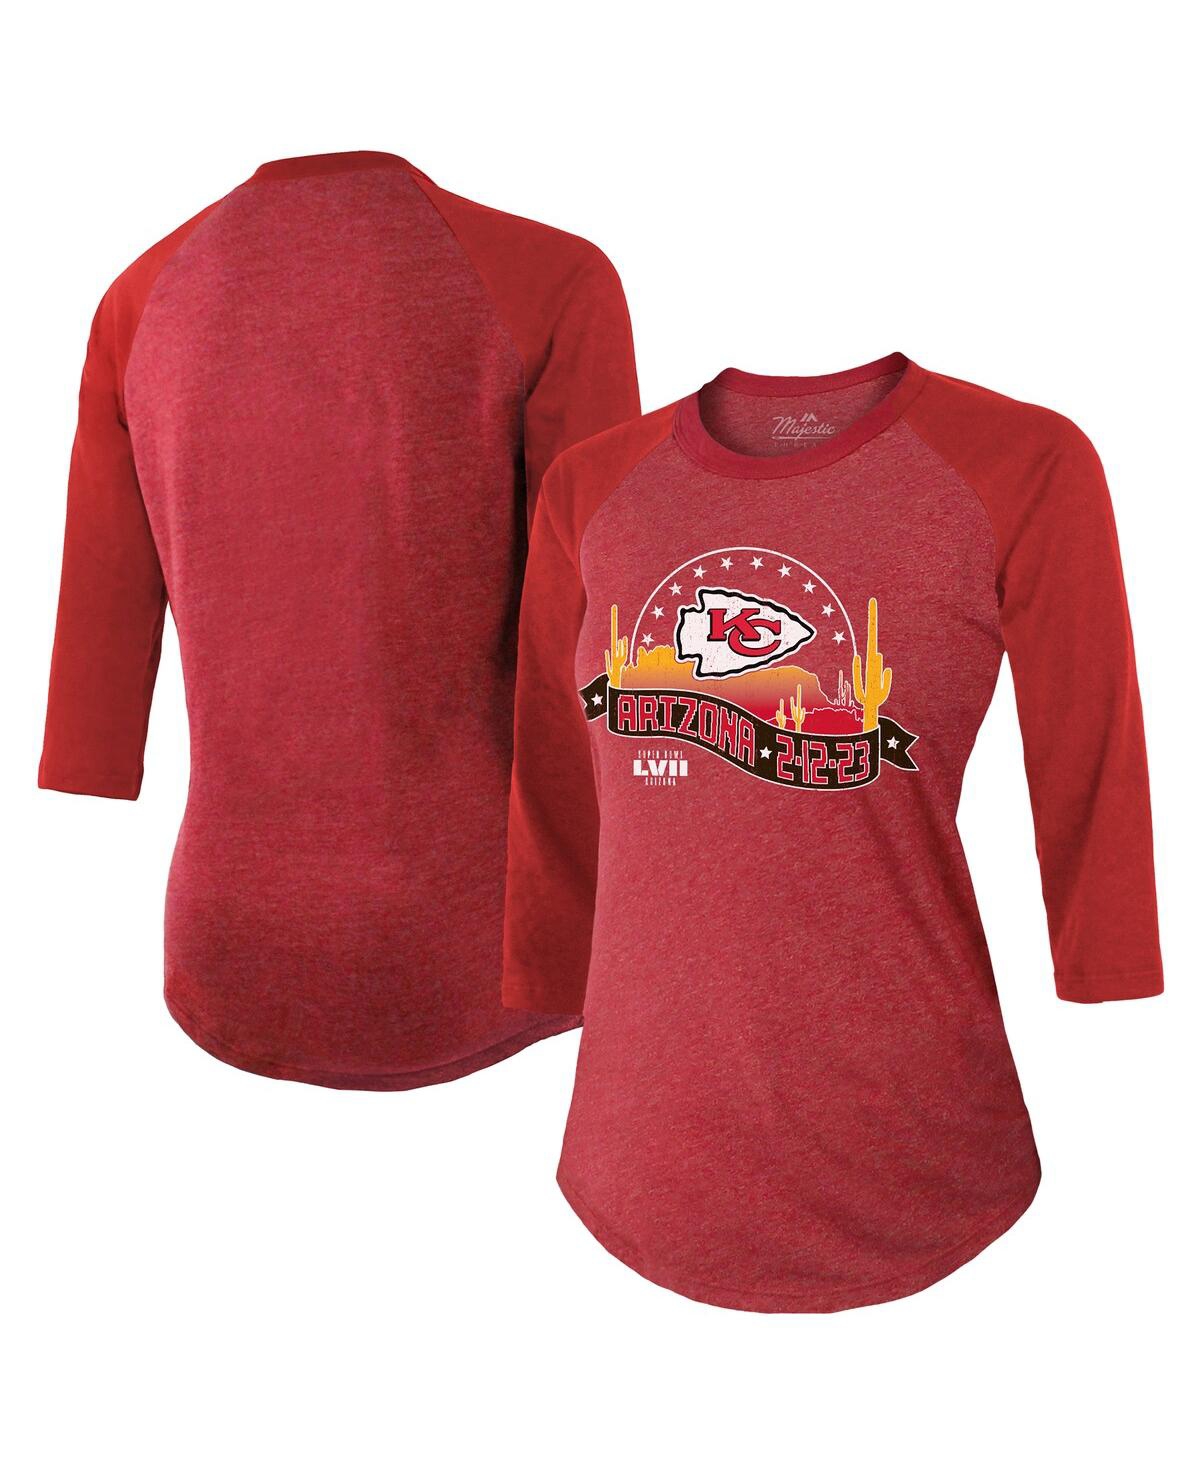 Shop Majestic Women's  Threads Red Kansas City Chiefs Super Bowl Lvii Desert Tri-blend Raglan 3/4 Sleeve T